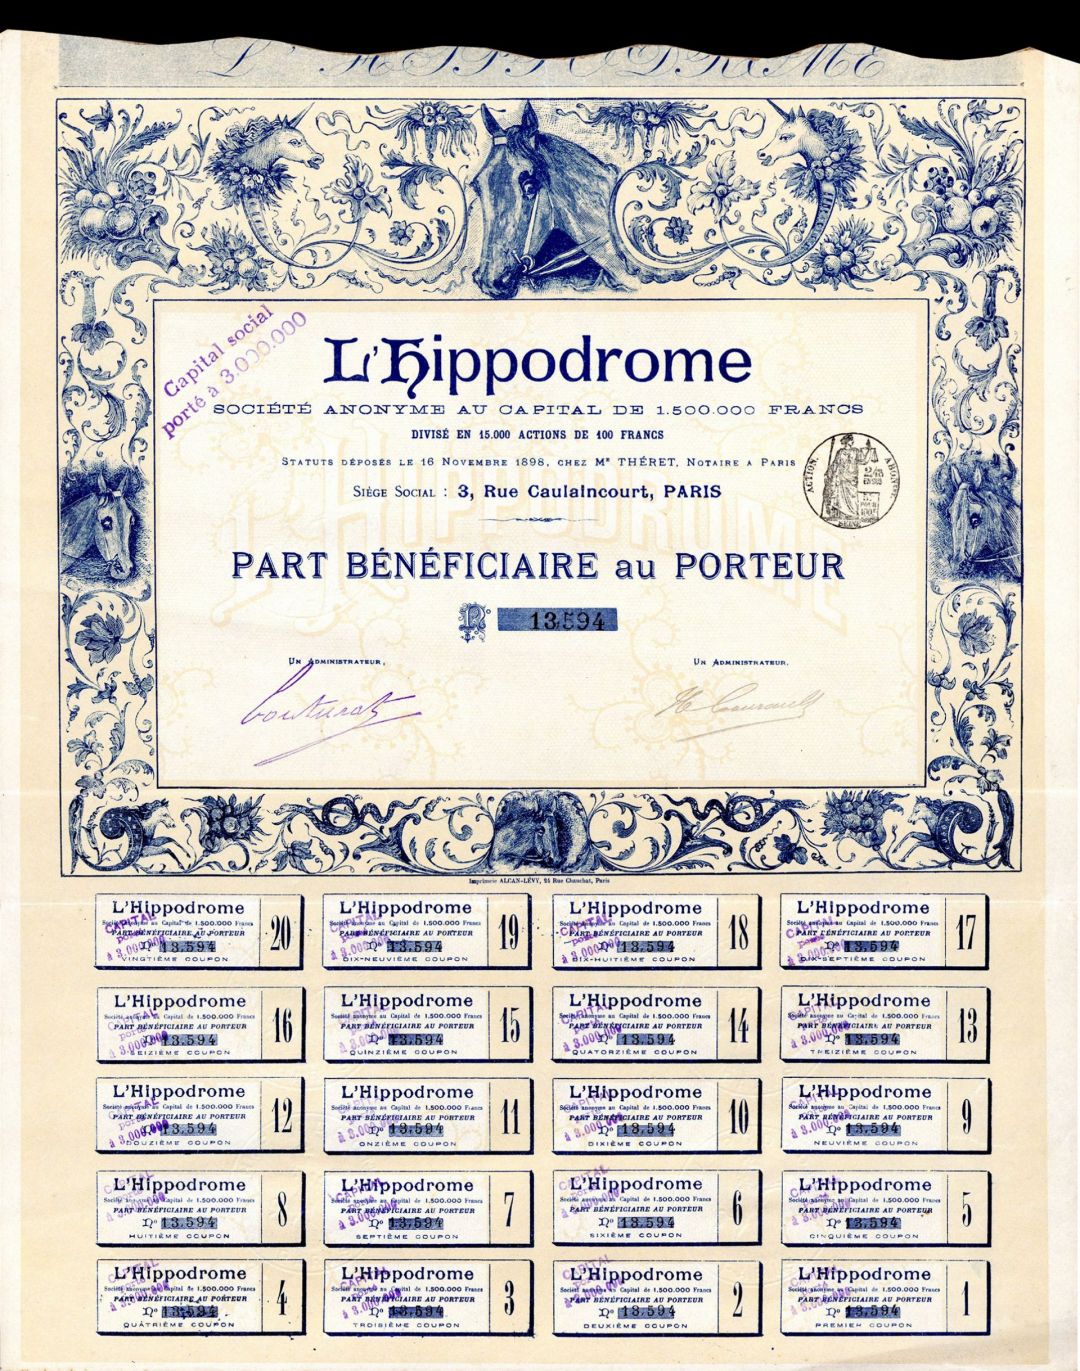 L'Hippodrome - Stock Certificate